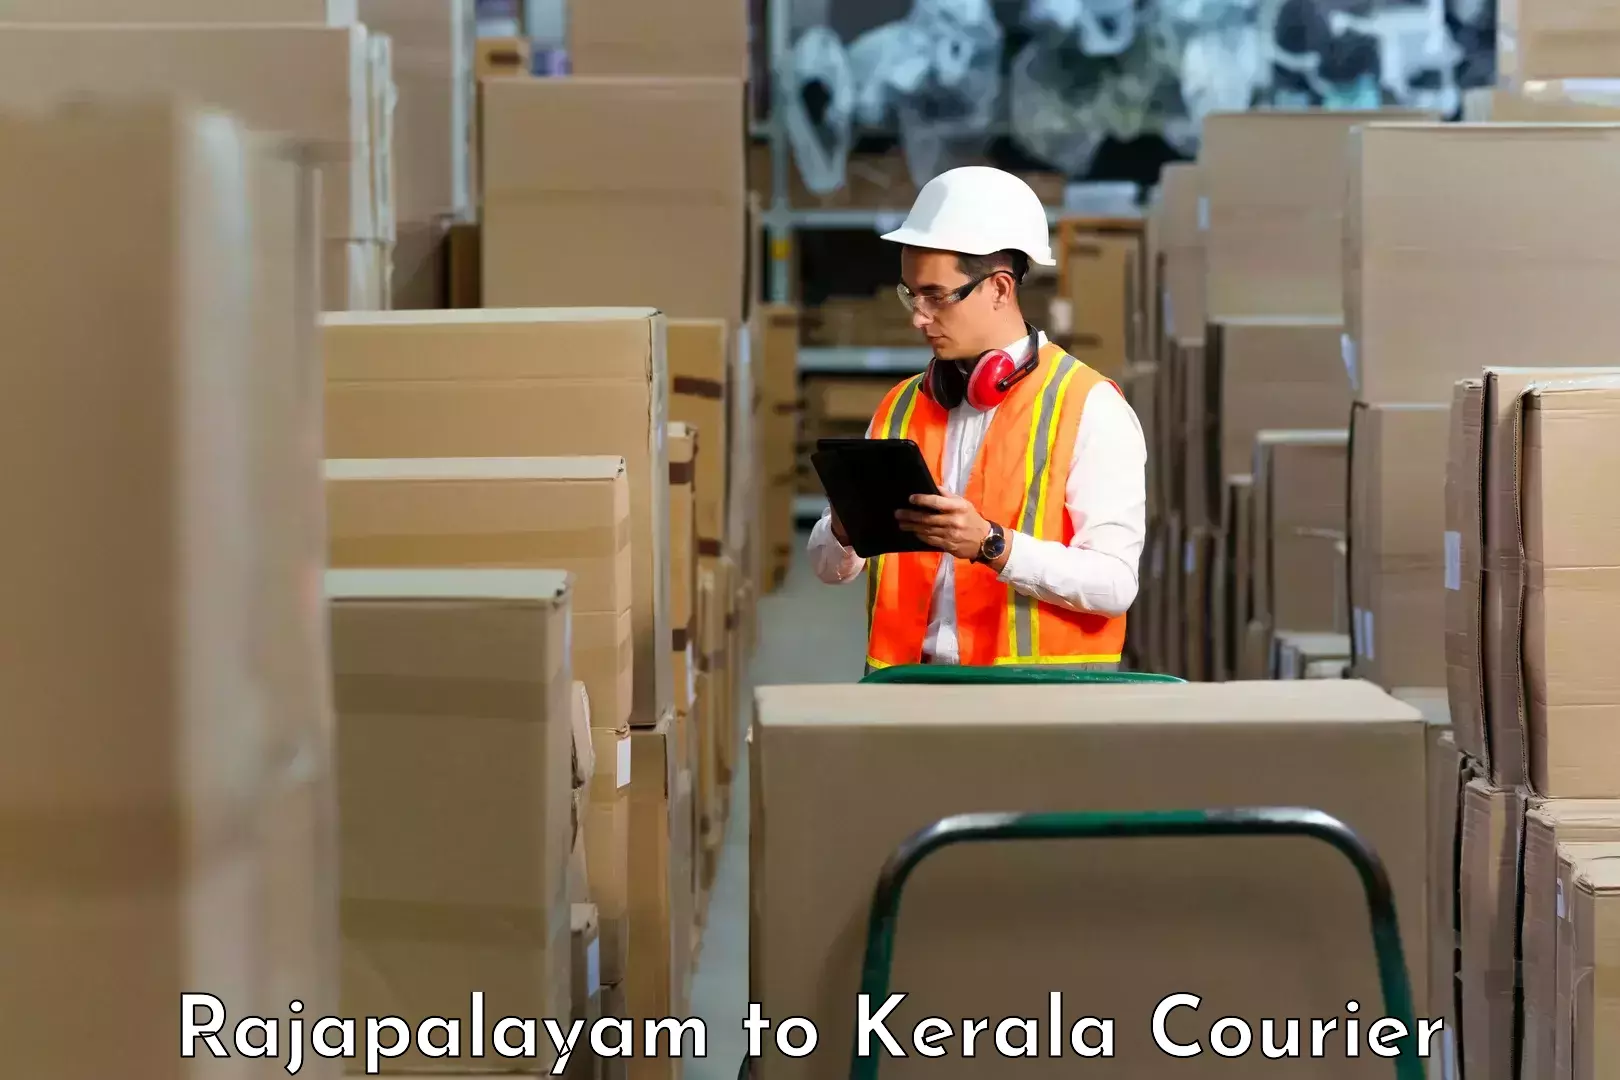 Same-day delivery solutions Rajapalayam to Kottarakkara